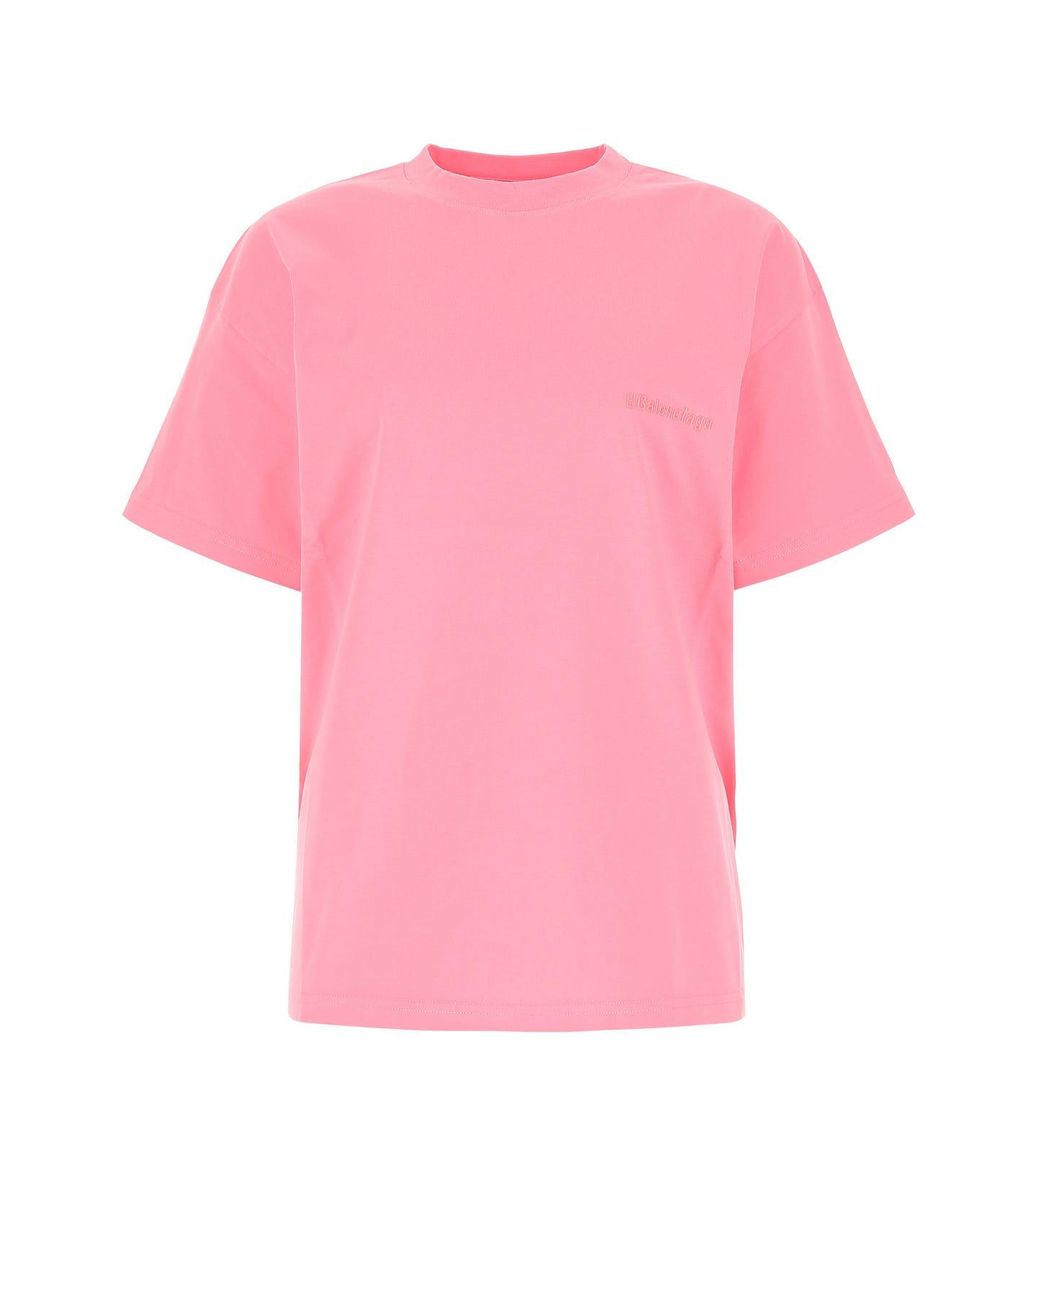 Balenciaga Cotton Oversize T-shirt in Pink - Lyst